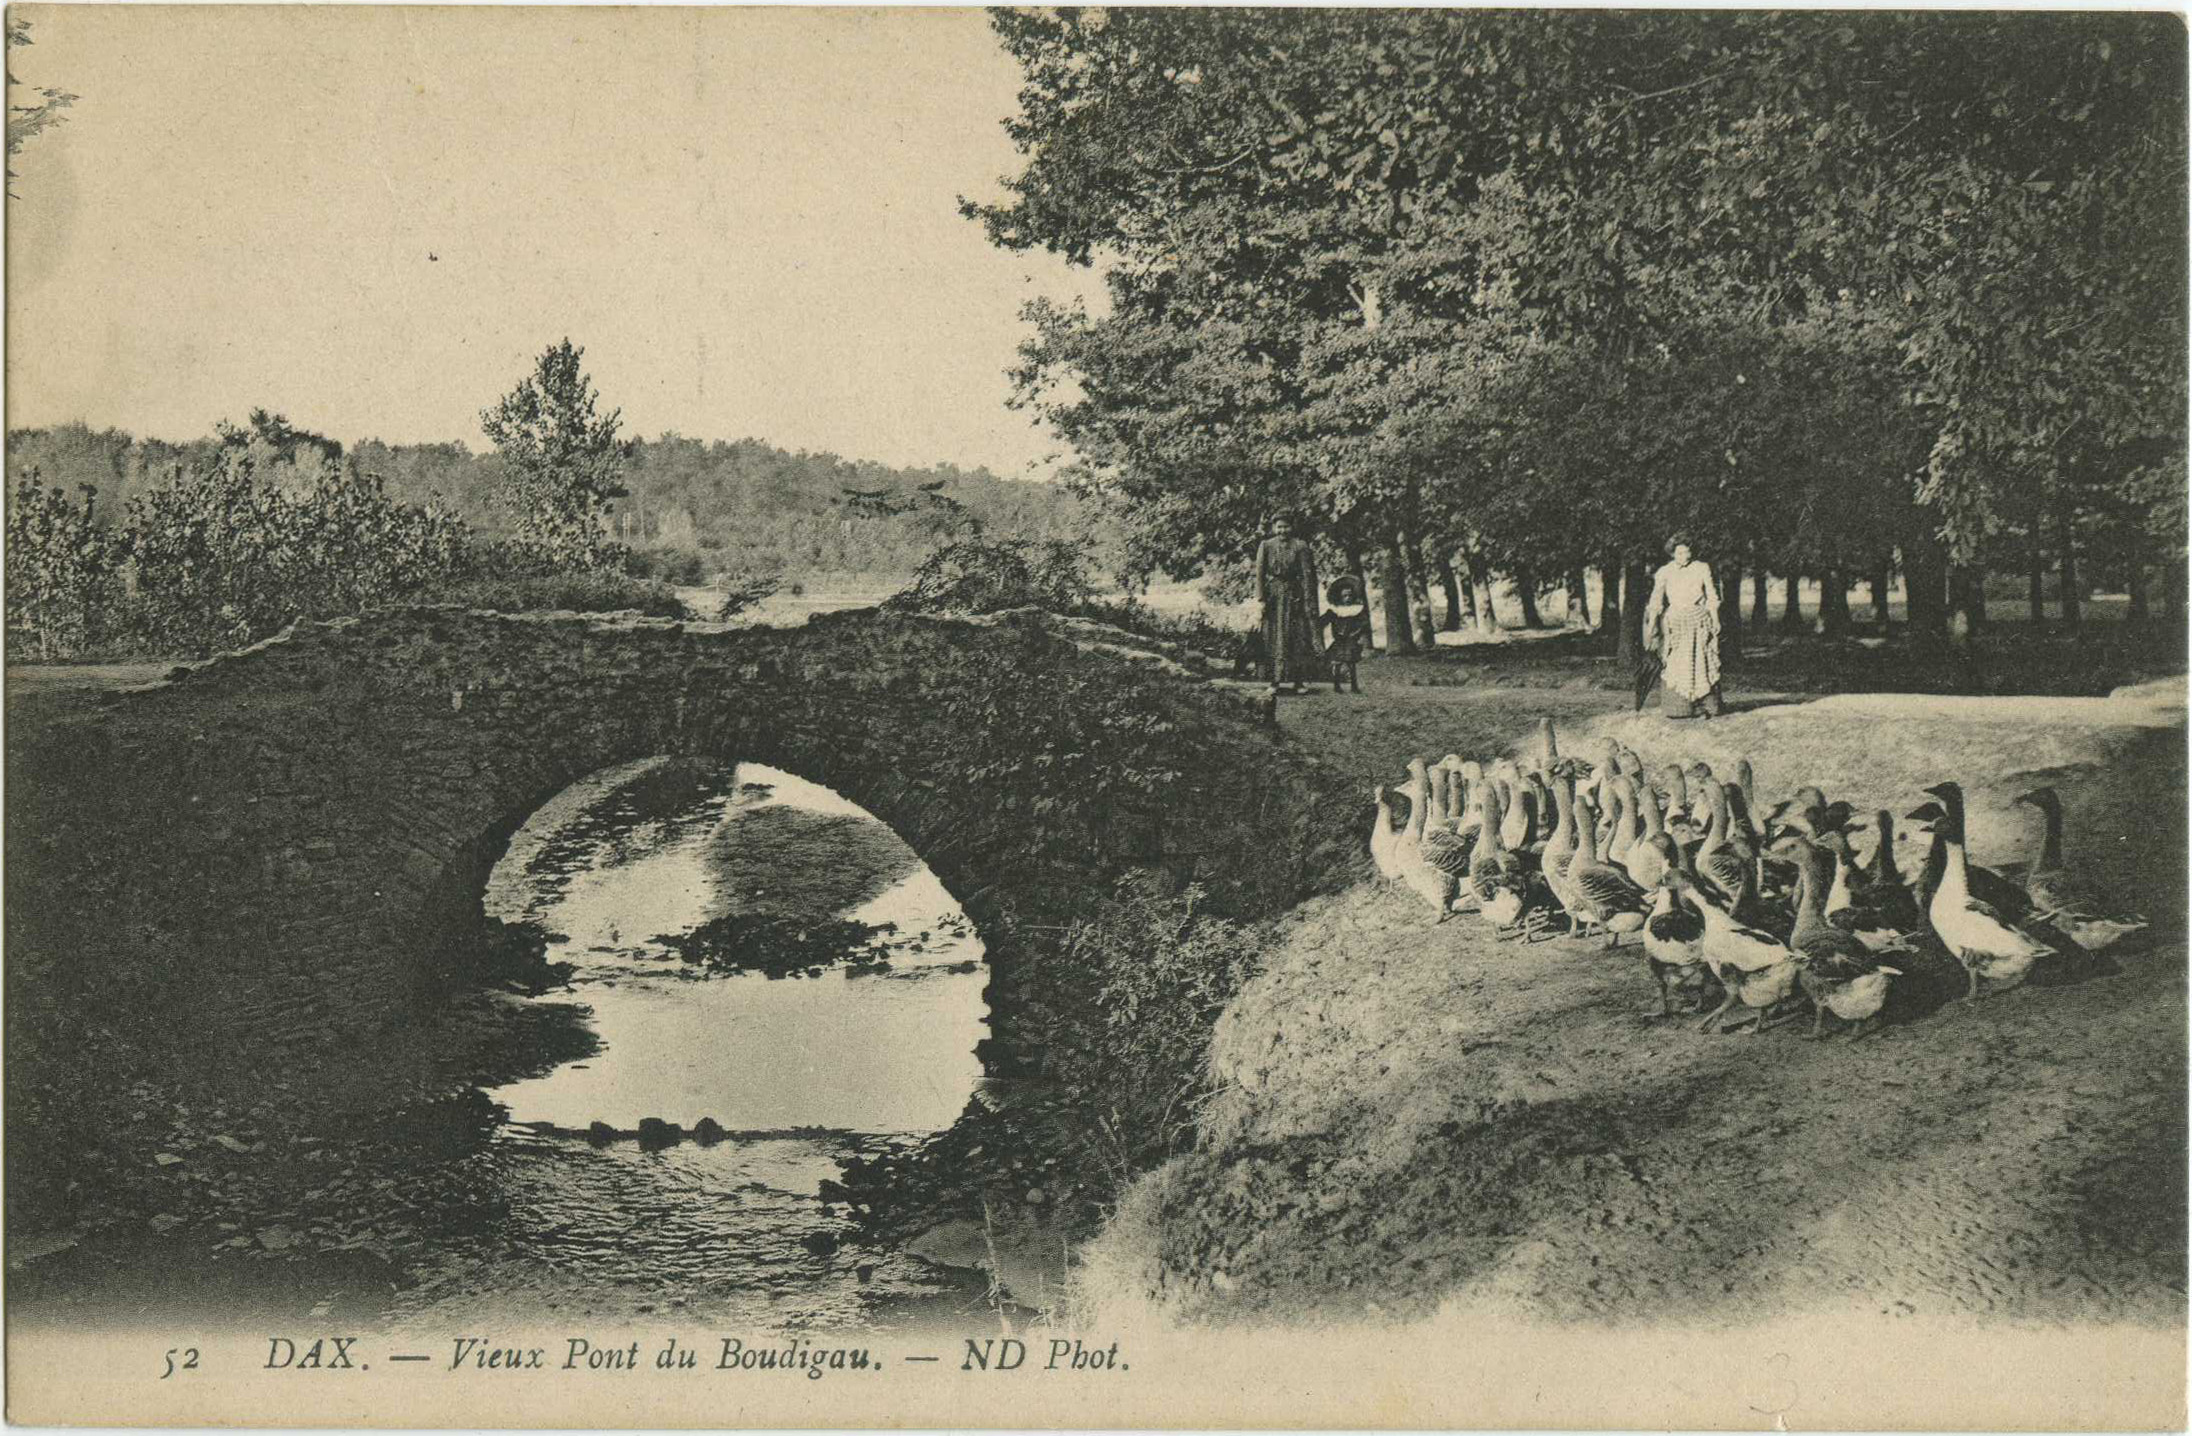 Dax - Vieux Pont du Boudigau.